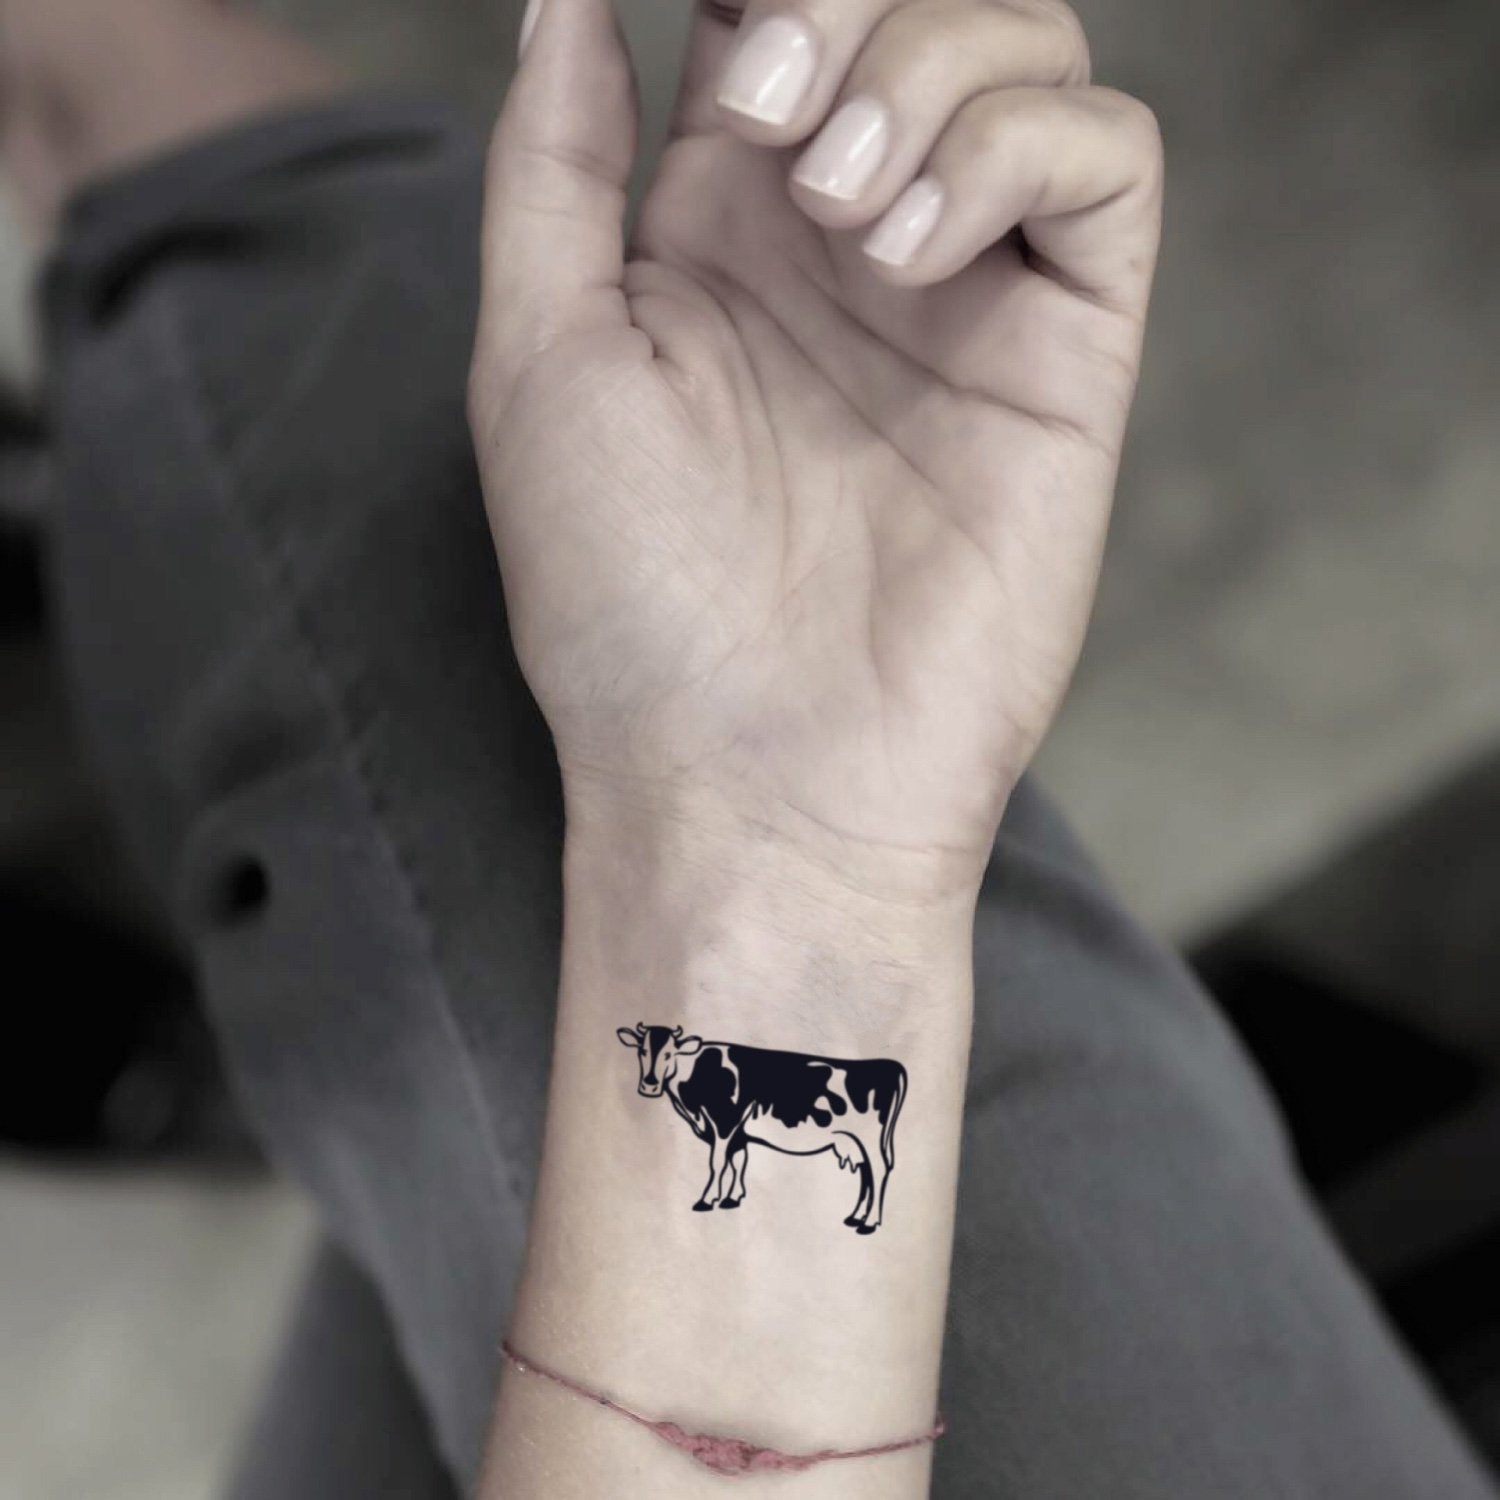 fake small cattle animal temporary tattoo sticker design idea on wrist